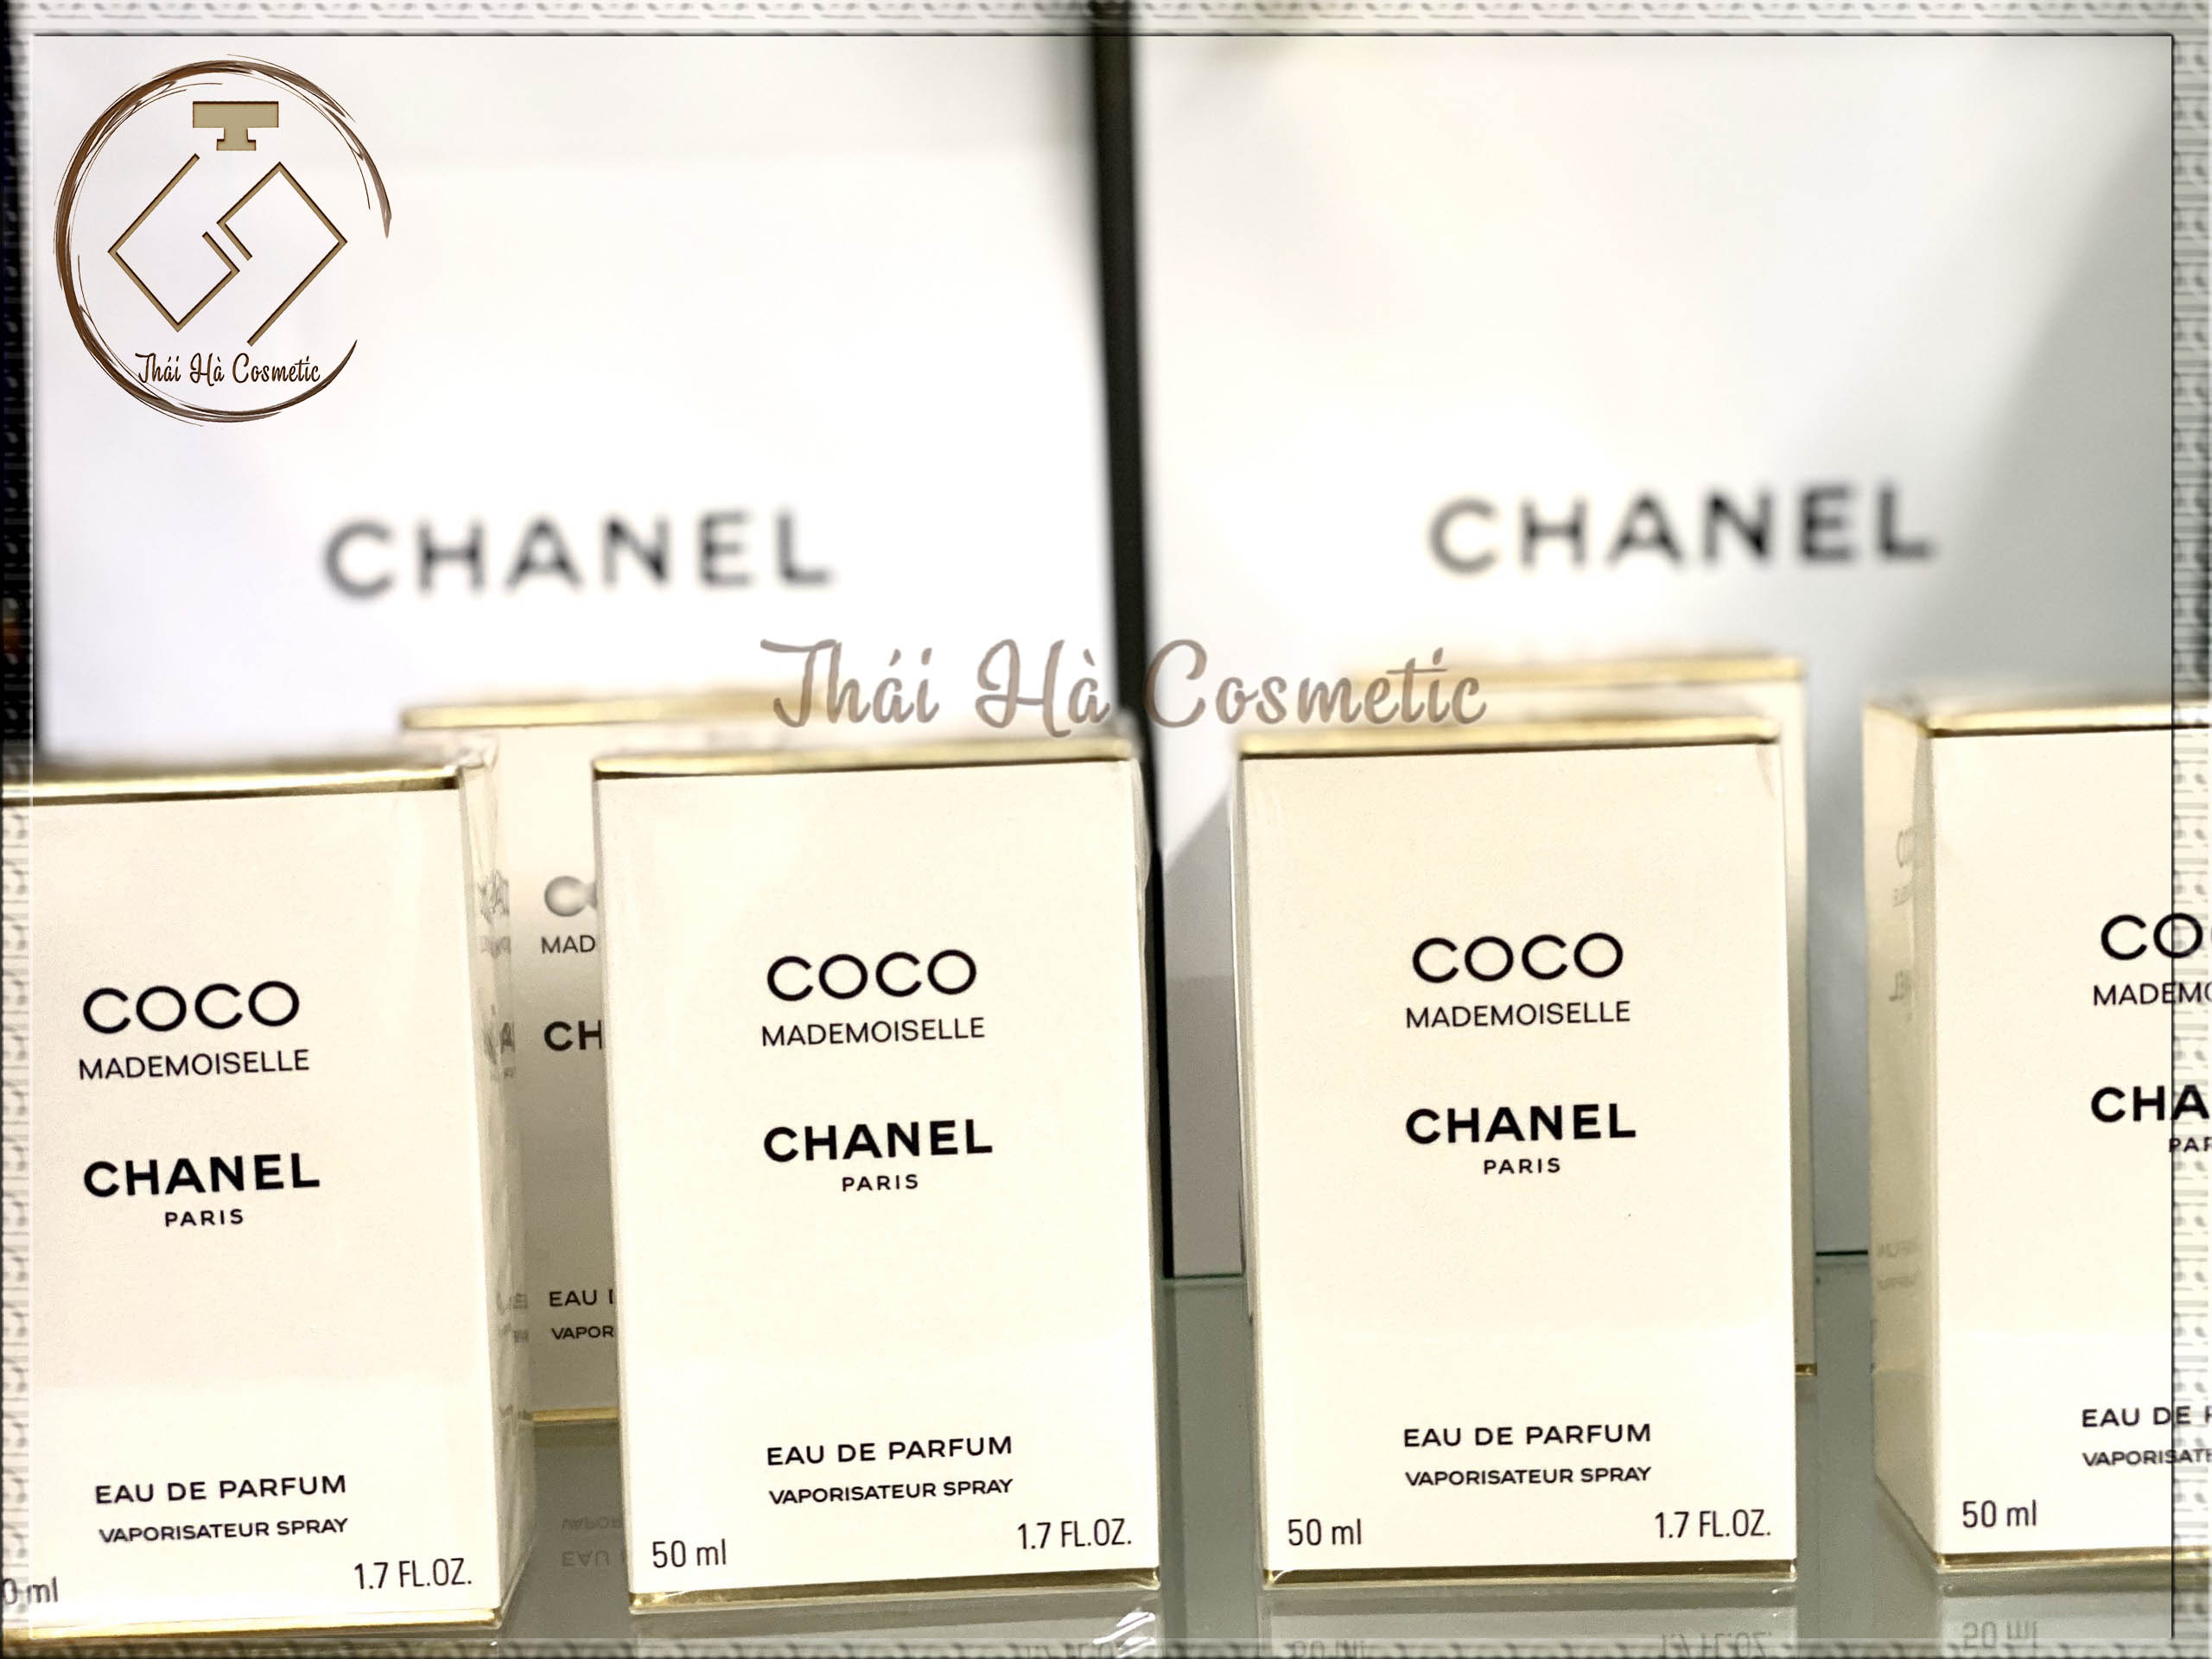 Fake vs Real Chanel Coco Noir Perfume 100 ml  YouTube